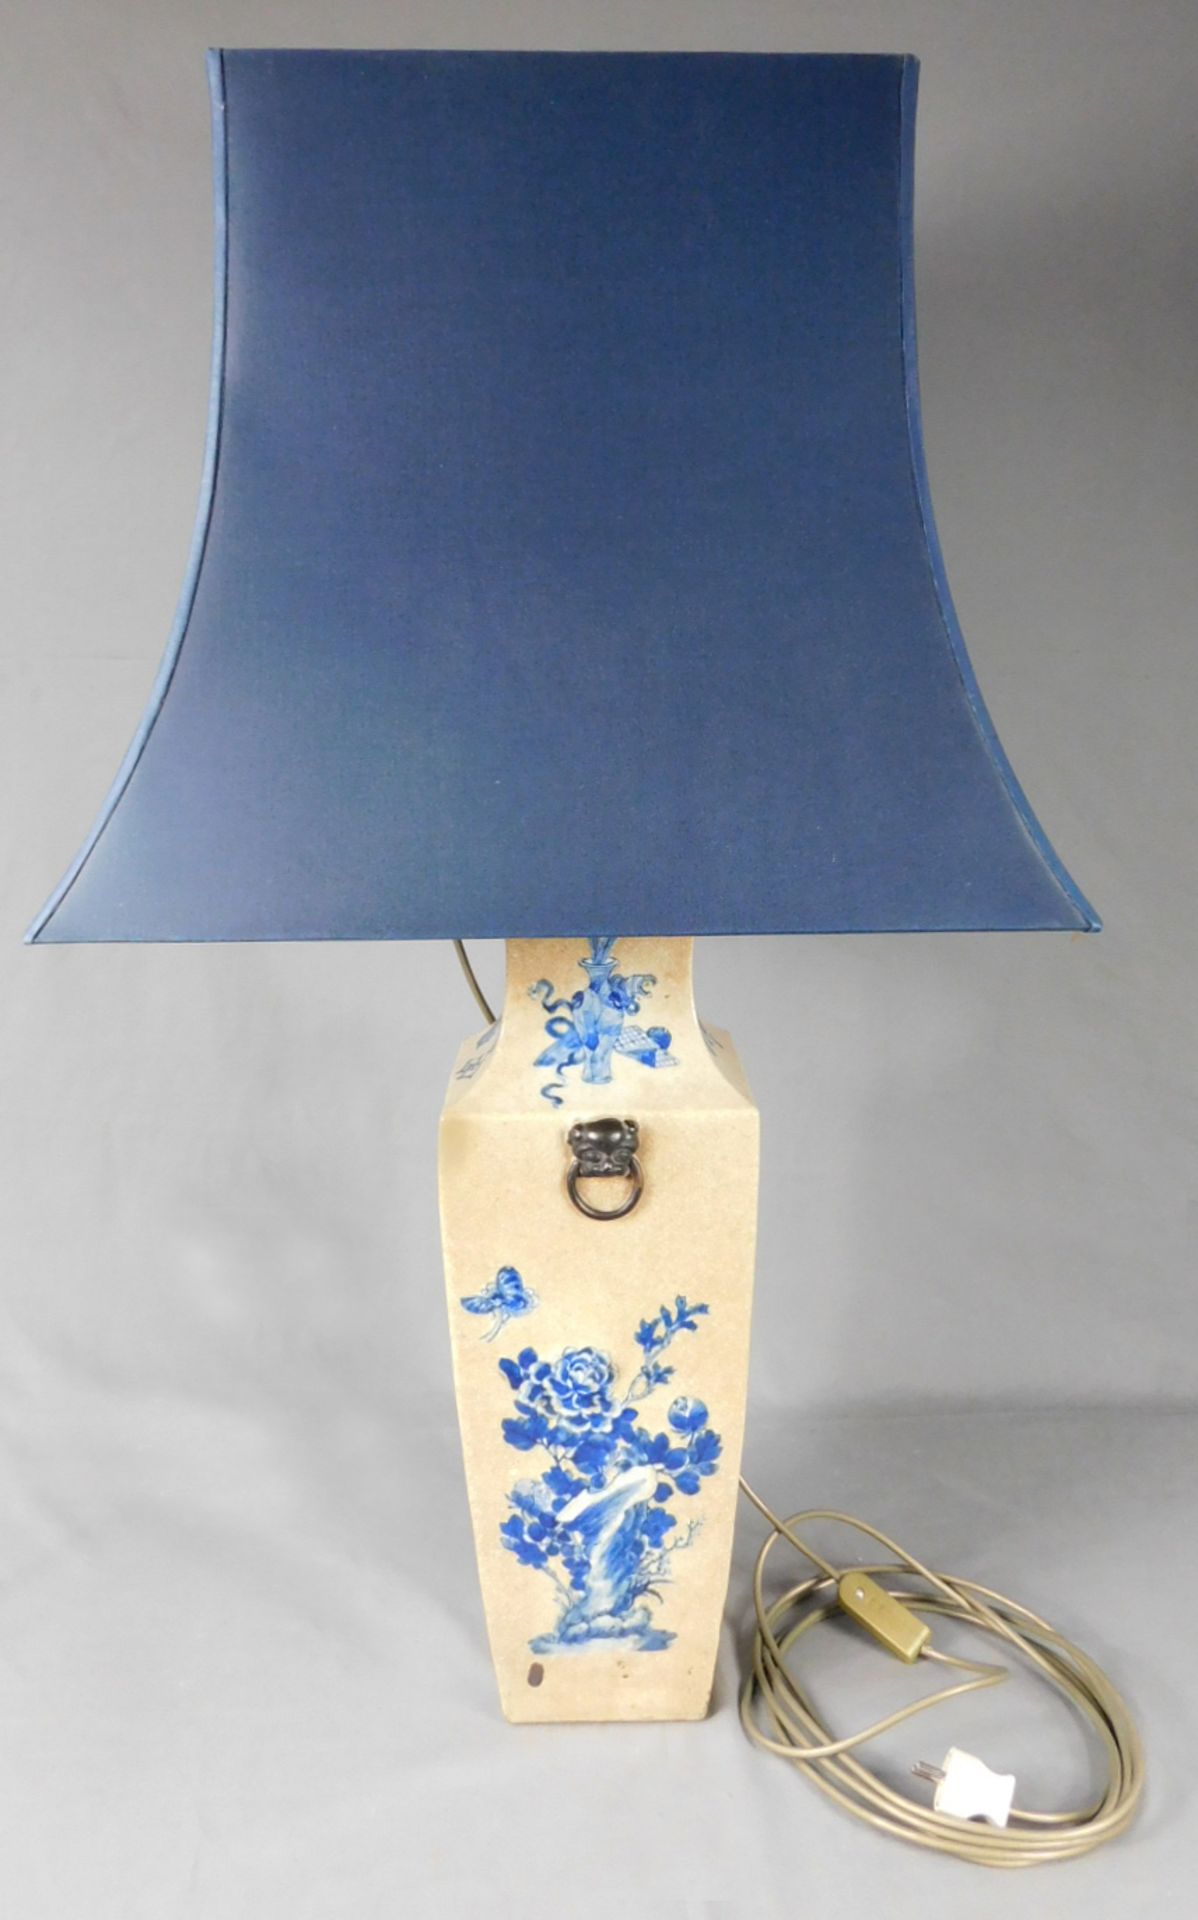 China Lampe. - Image 6 of 34